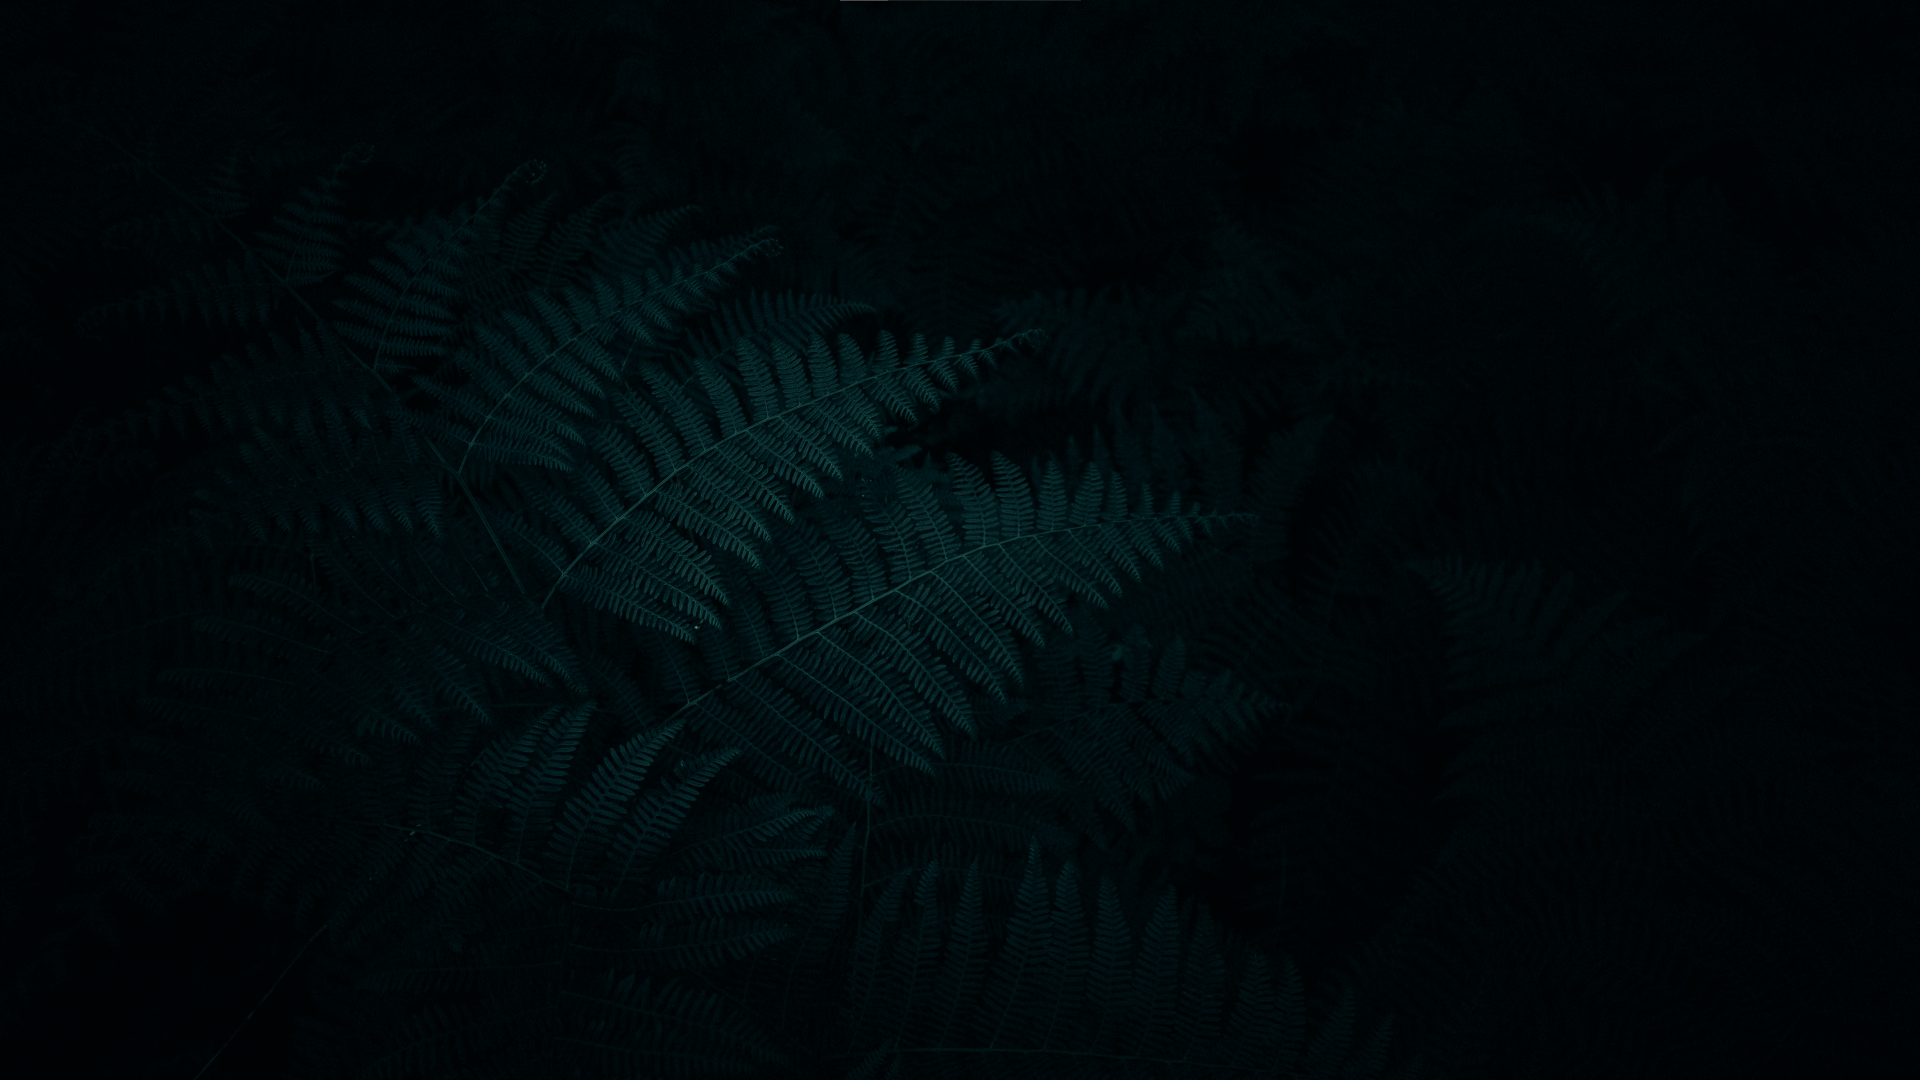 General 1920x1080 ferns night forest digital art low light dark background leaves nature